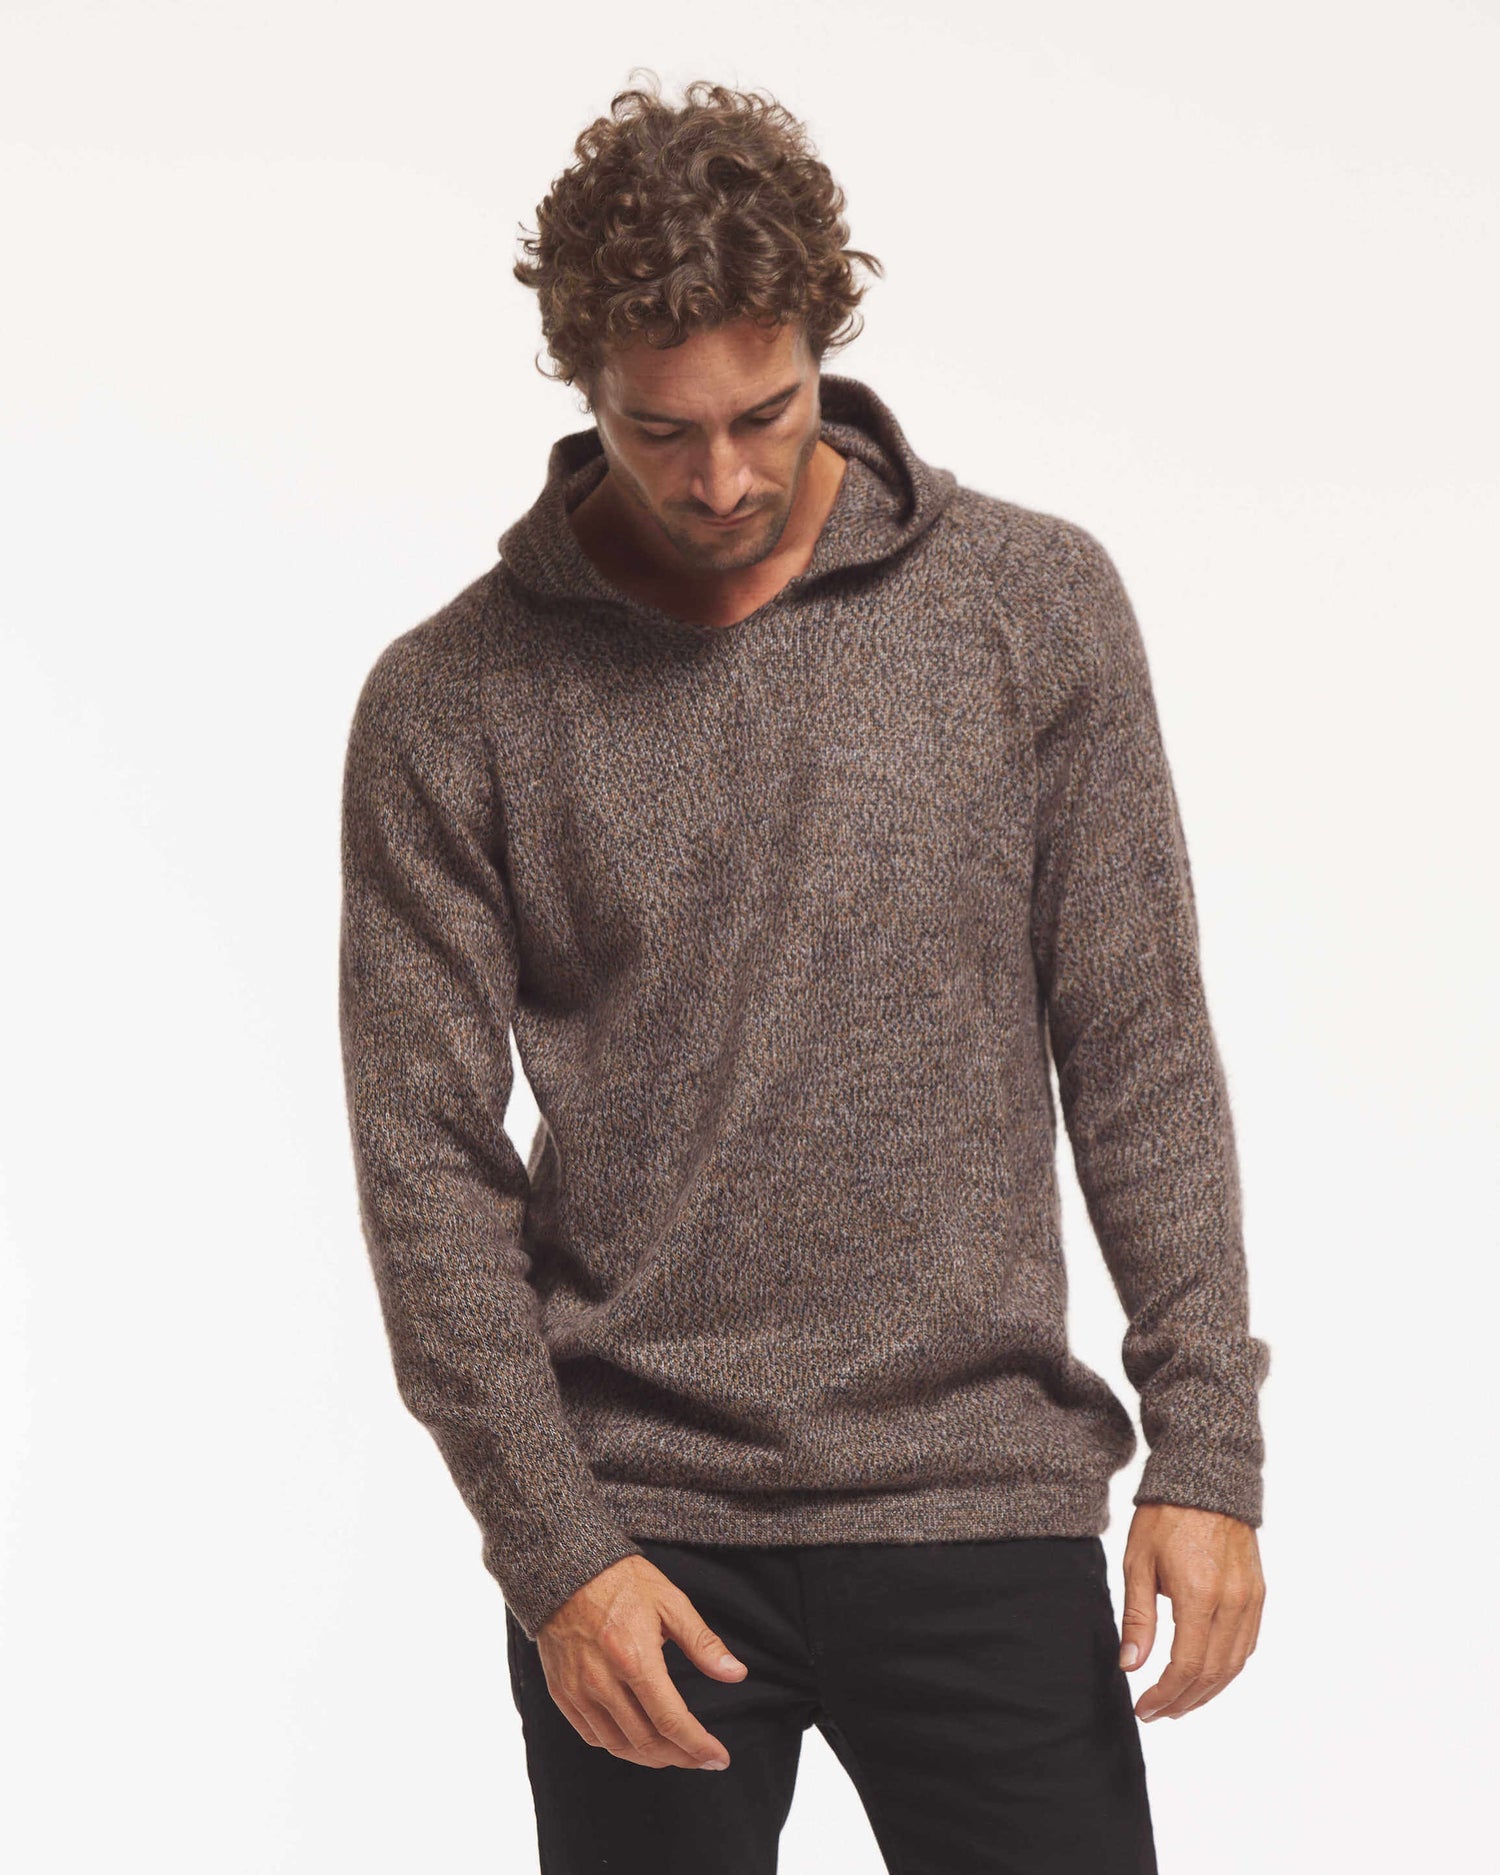 Wool sweatshirt